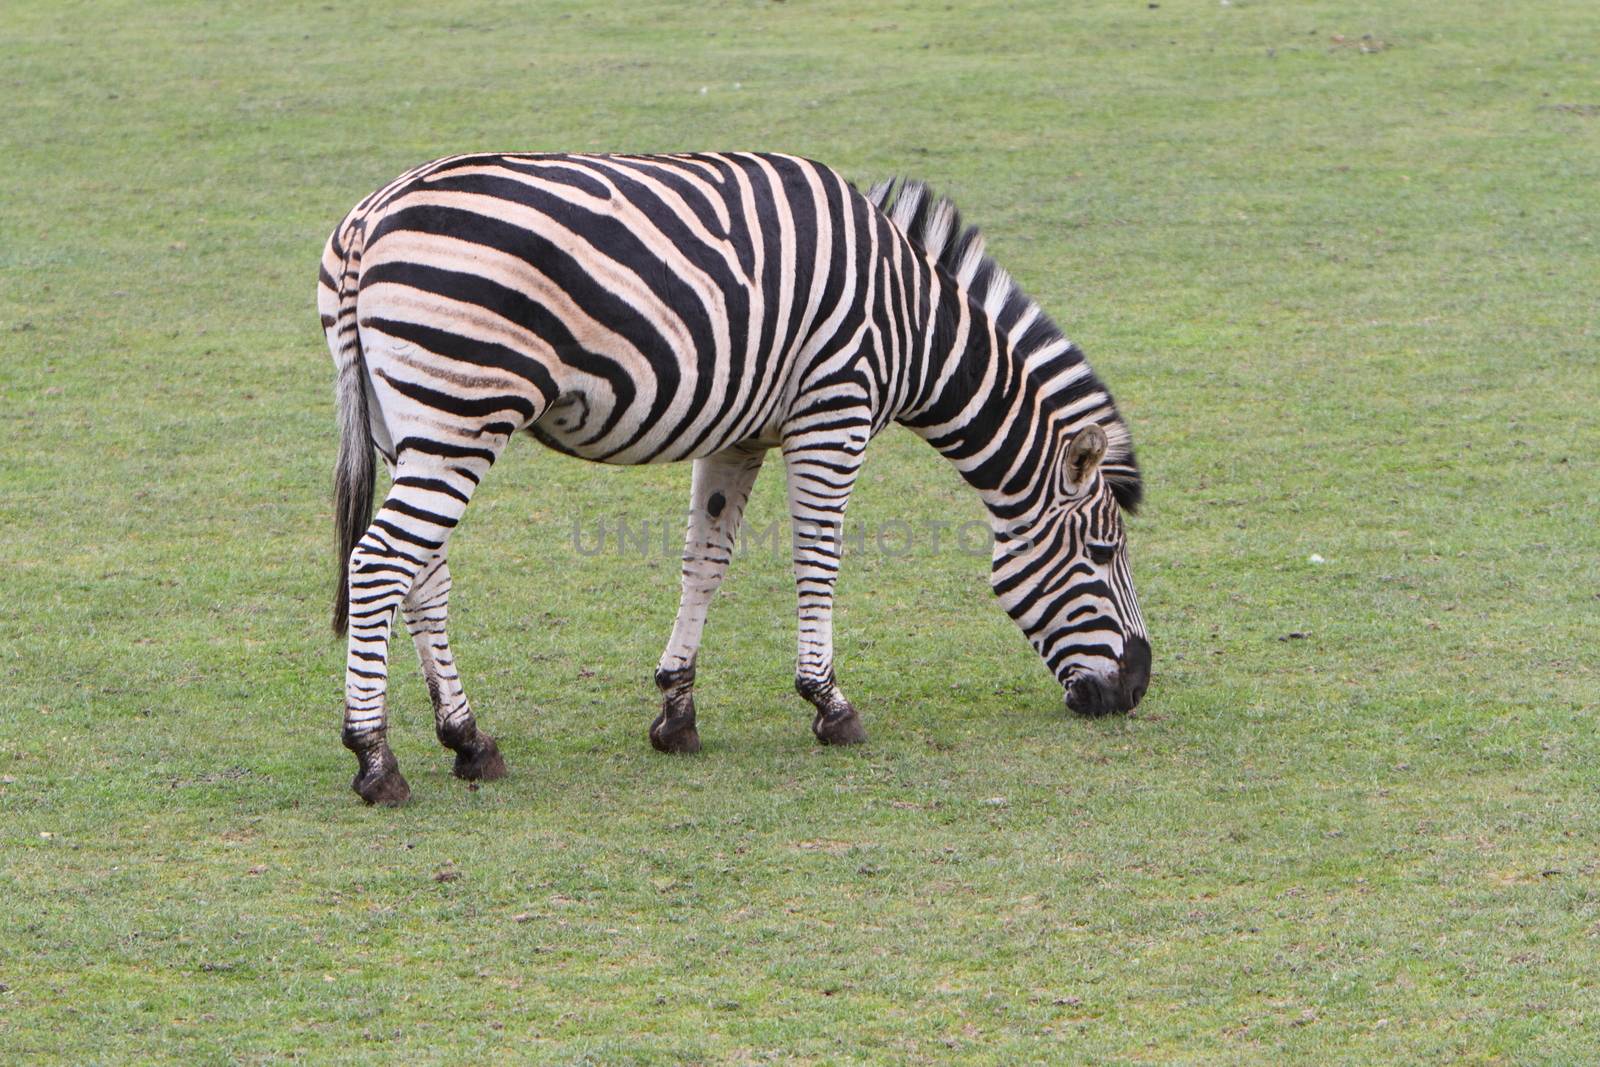 Chapman's Zebra (Equus quagga chapmani) by mitzy